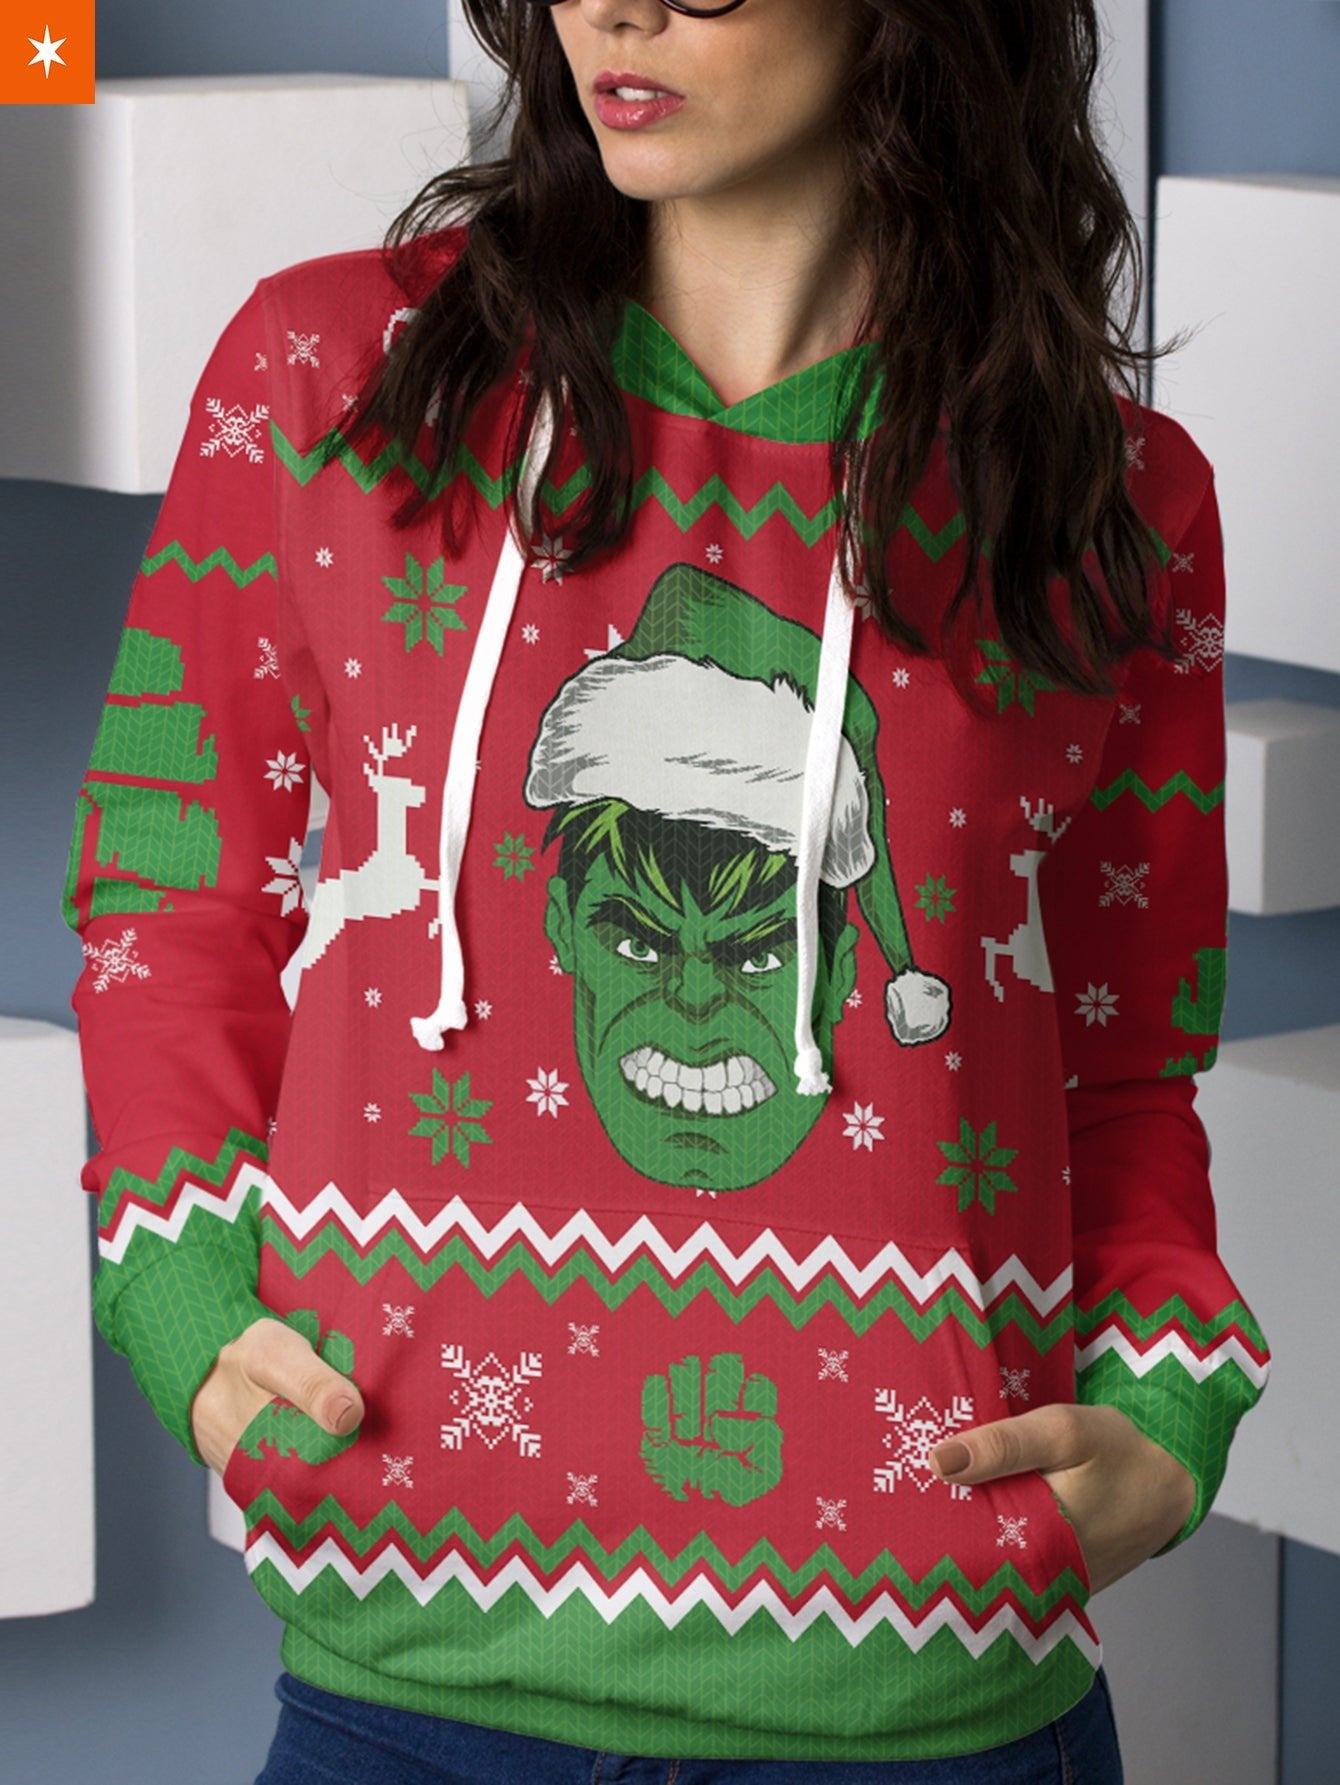 Fandomaniax - Hulk Smashin' Christmas Unisex Pullover Hoodie